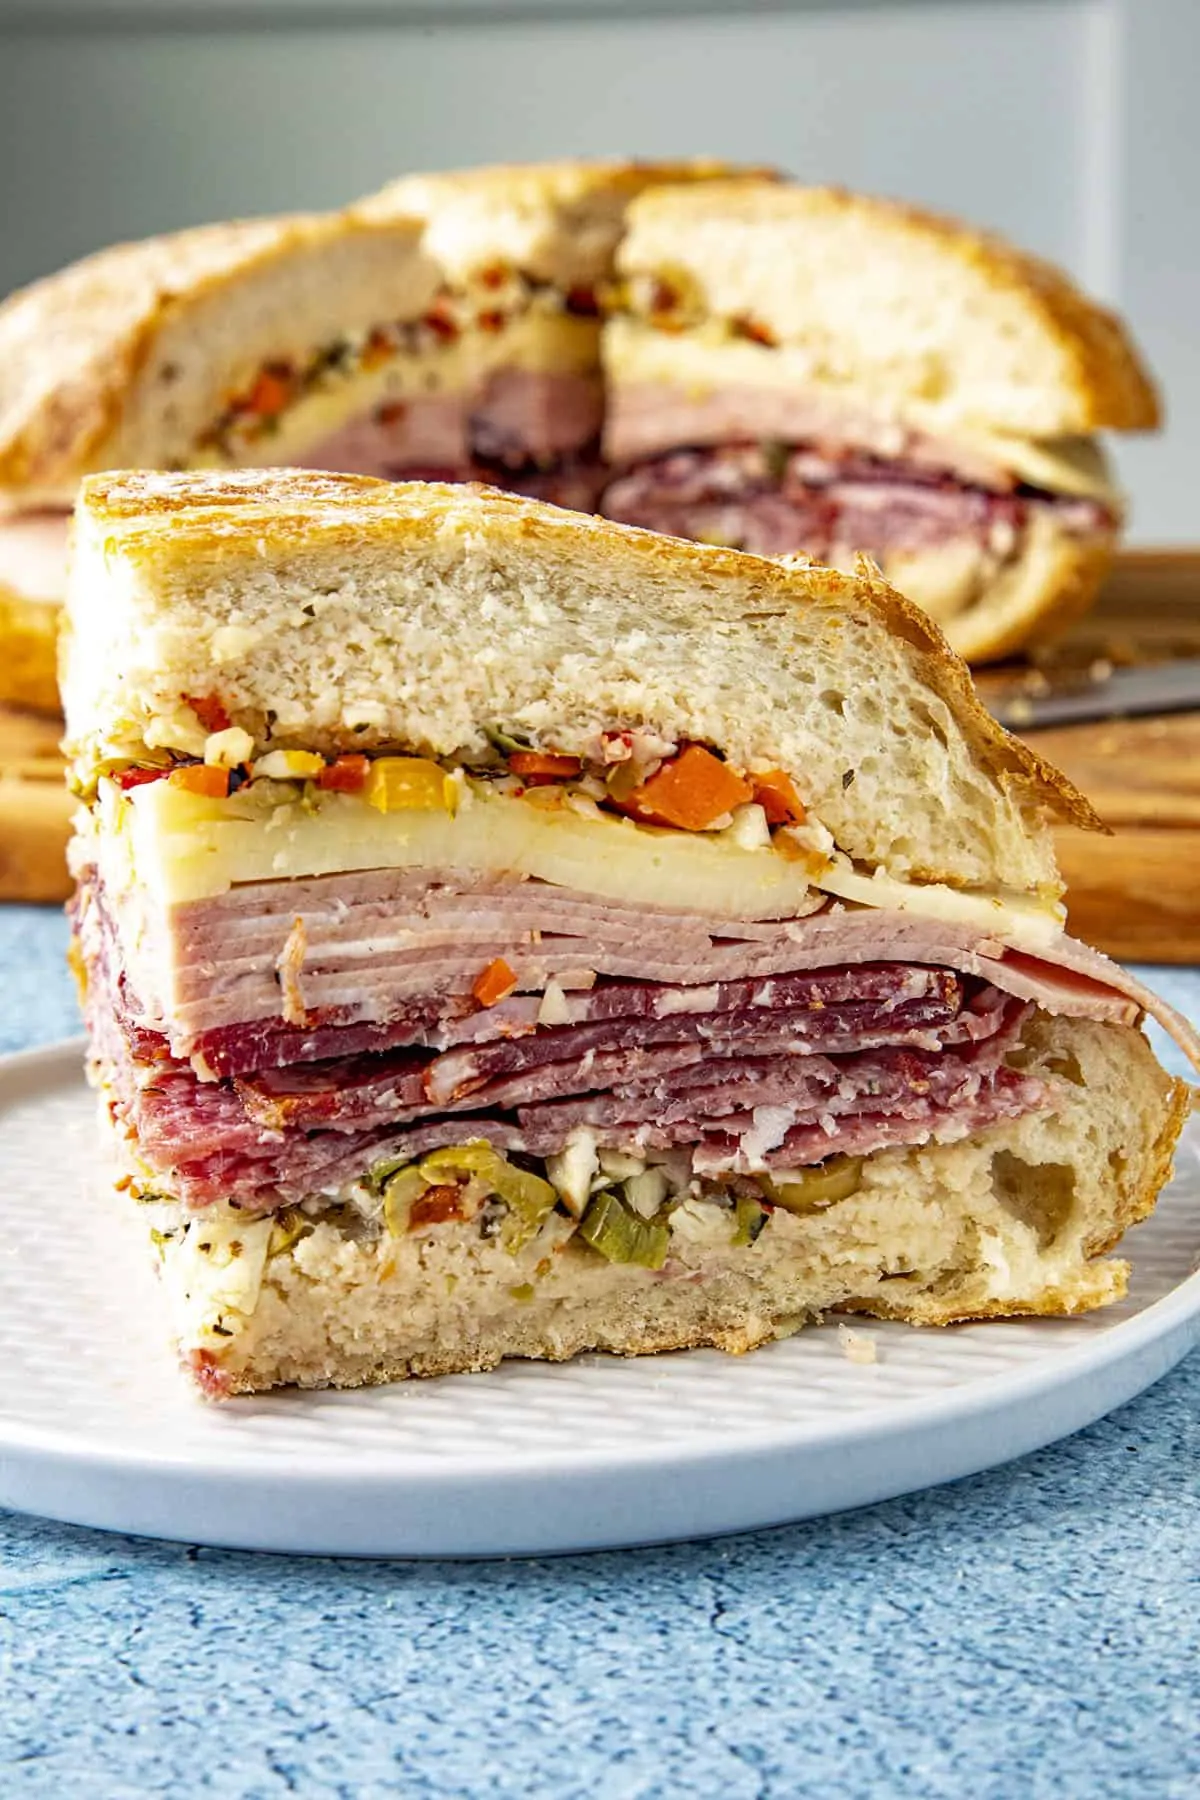 A slice of a Muffaletta sandwich